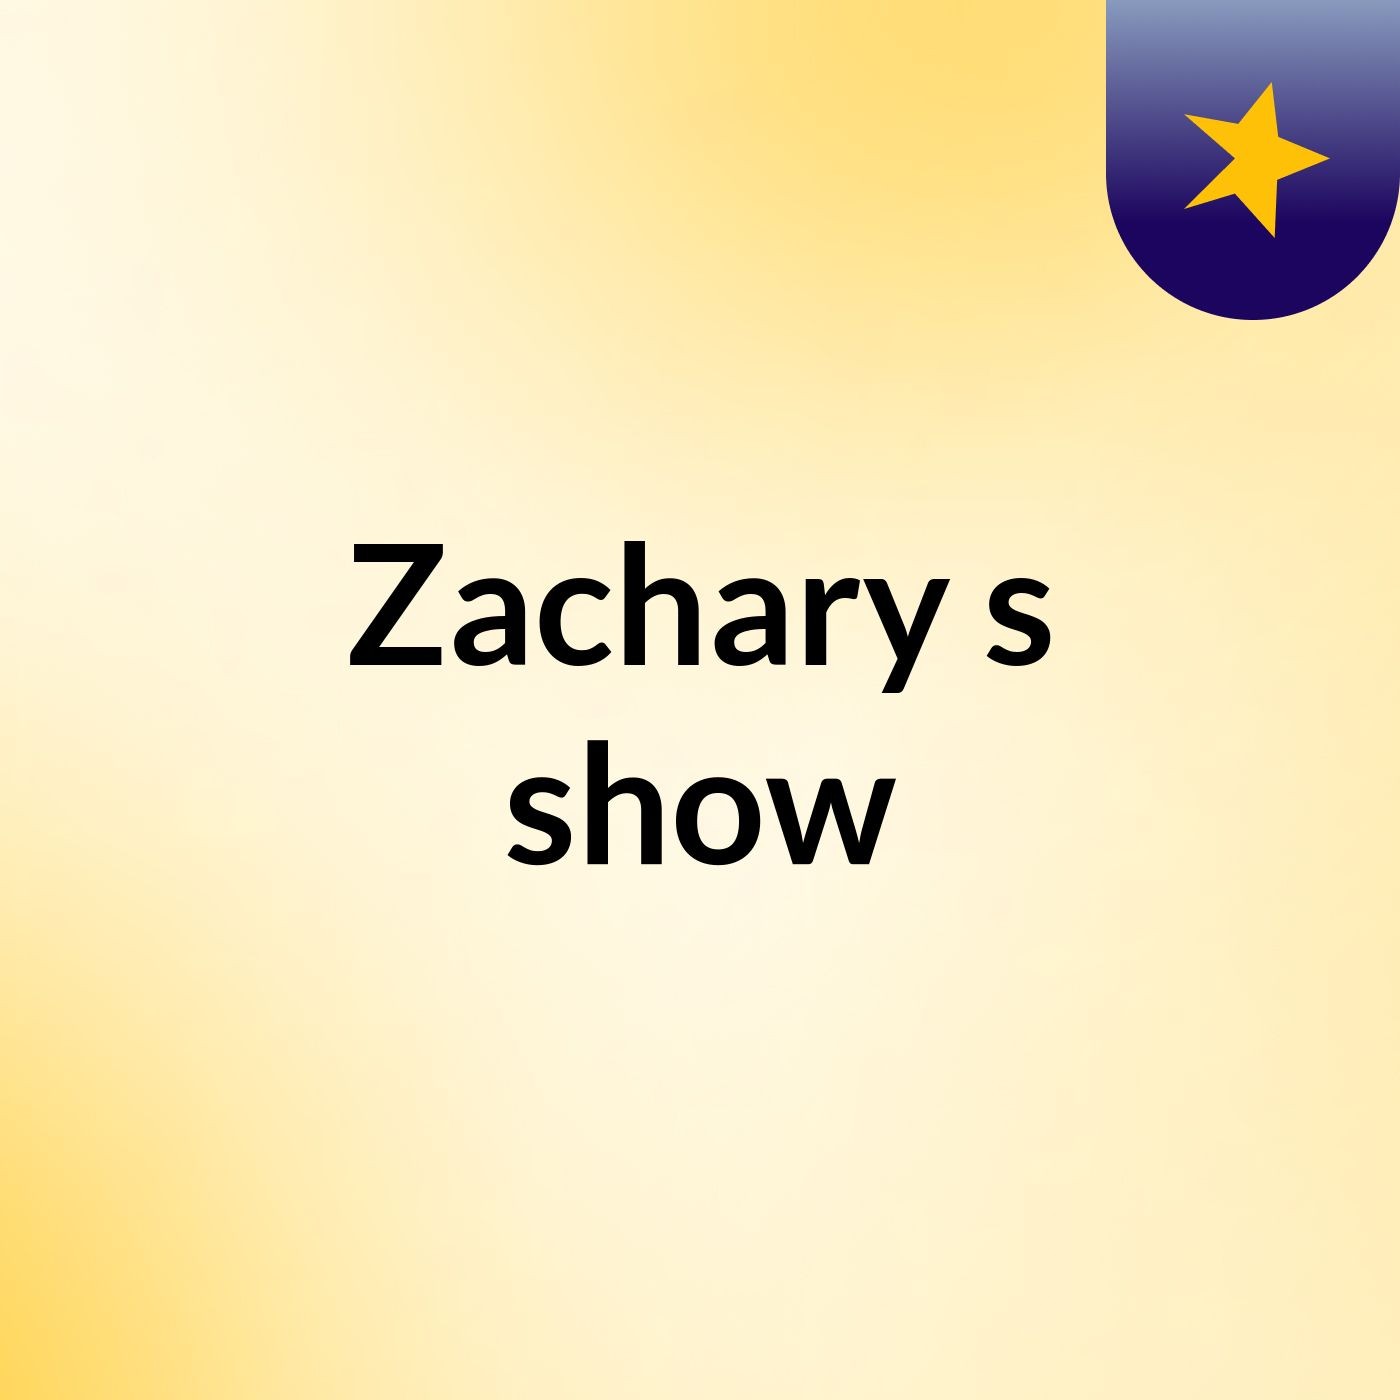 Zachary's show